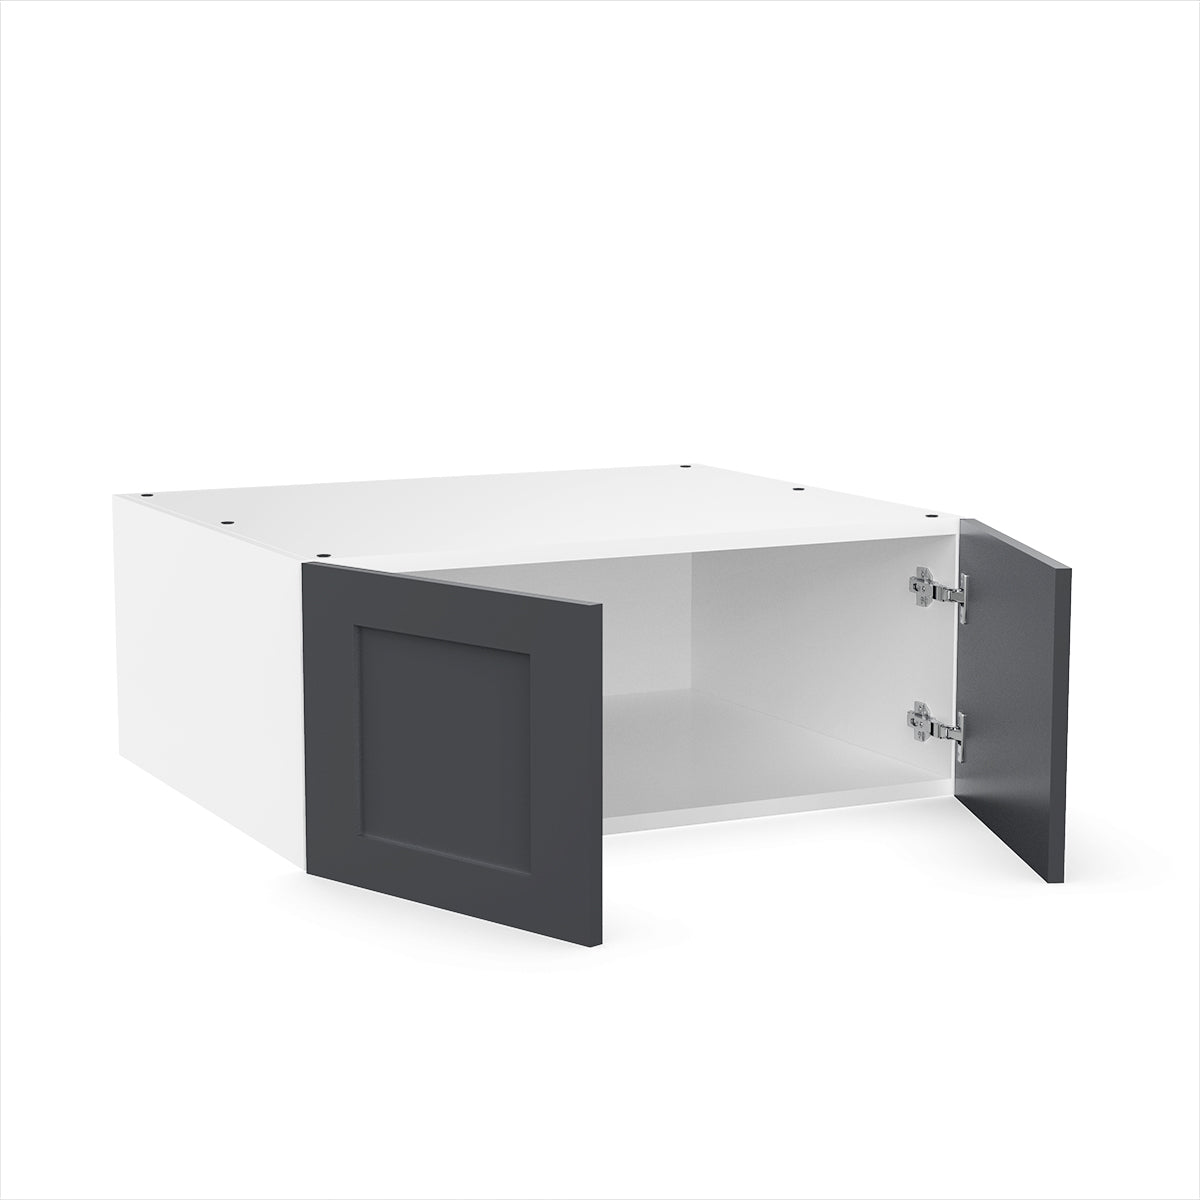 RTA - Grey Shaker - Double Door Refrigerator Wall Cabinets | 33"W x 12"H x 24"D